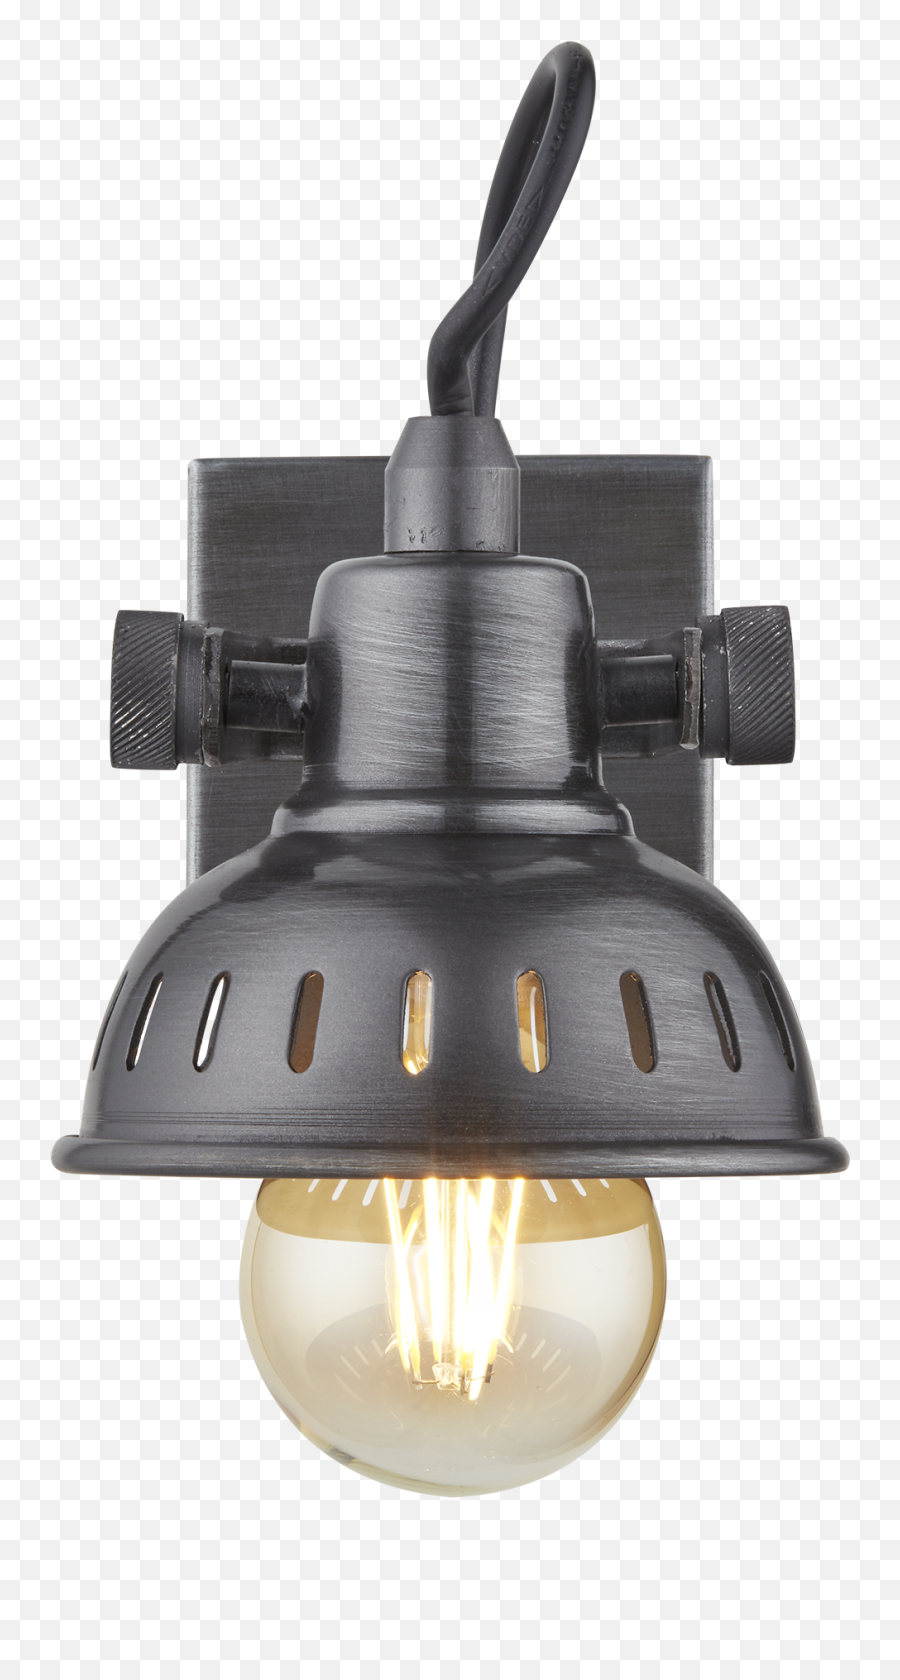 Download Swivel Wall Spotlight - Full Size Png Image Pngkit Lamp,Spotlight Png